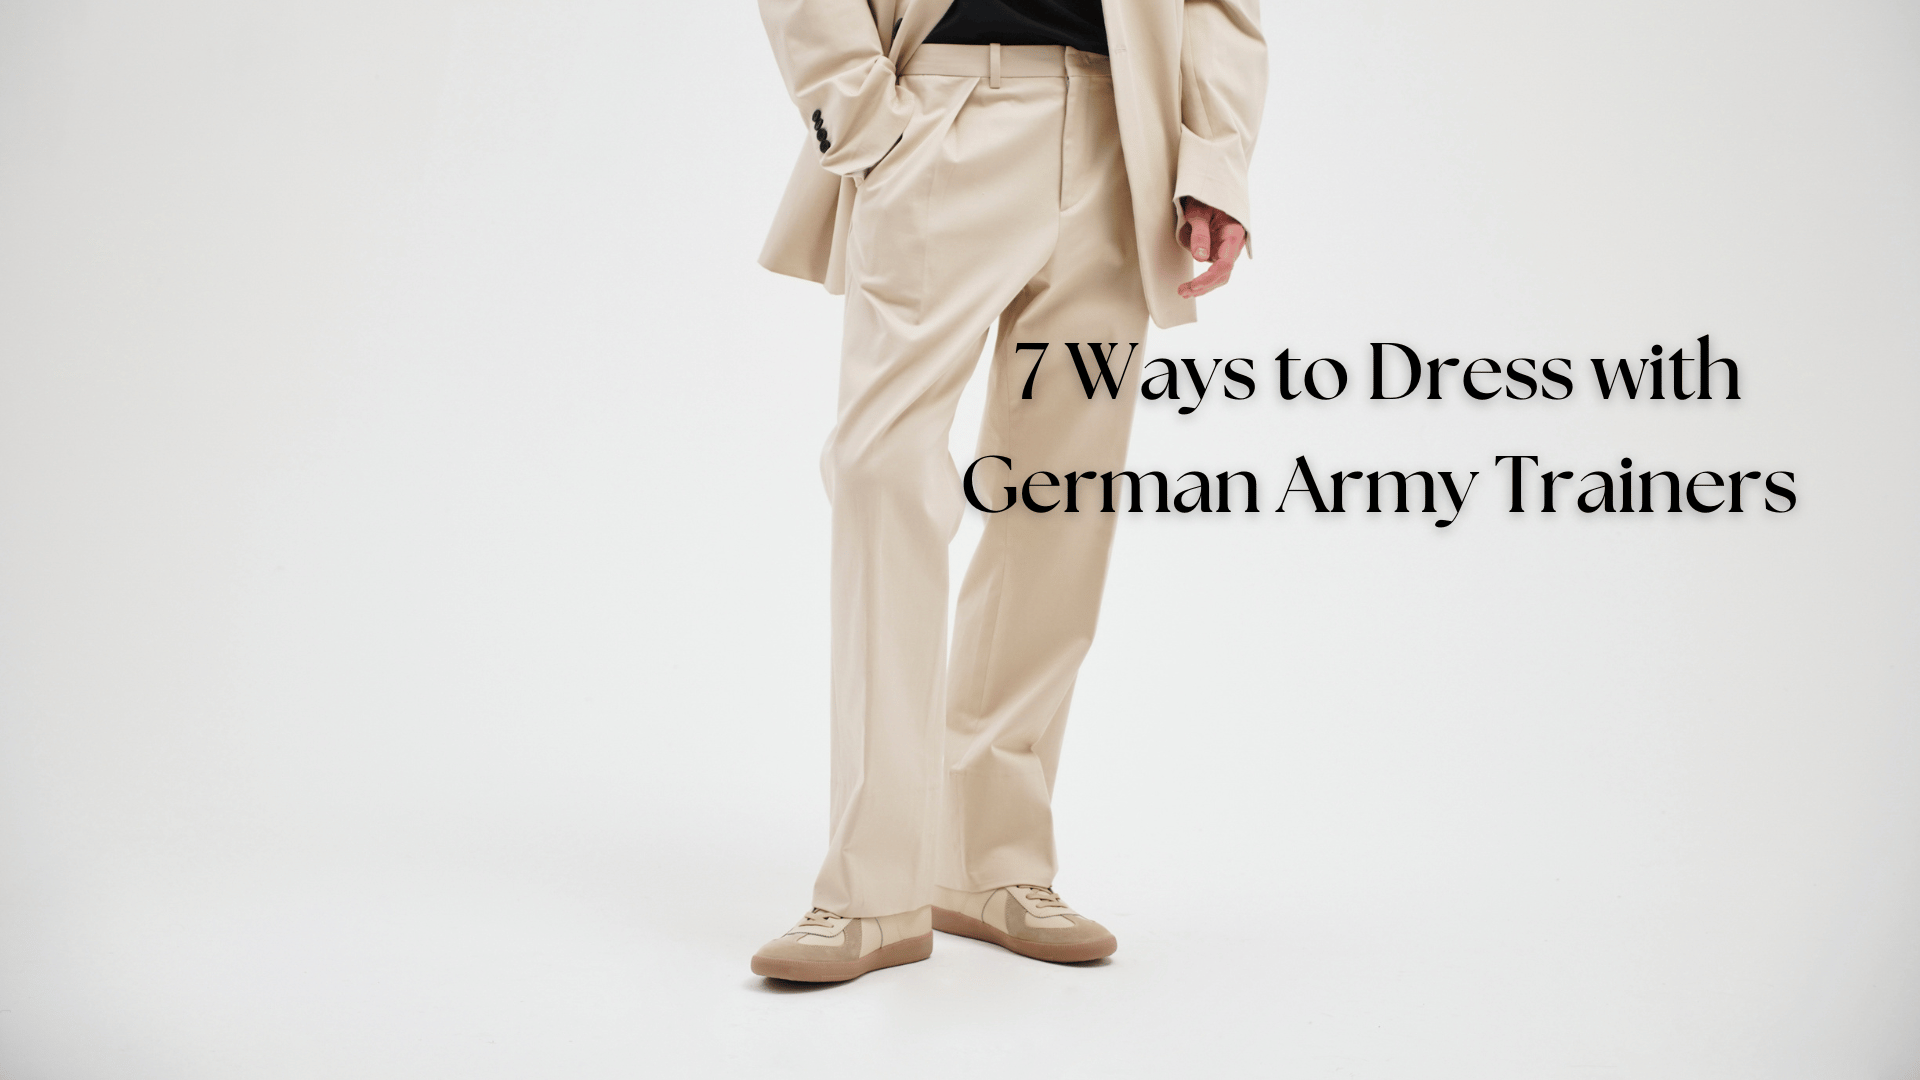 7 Ways to Dress with German Army Trainers